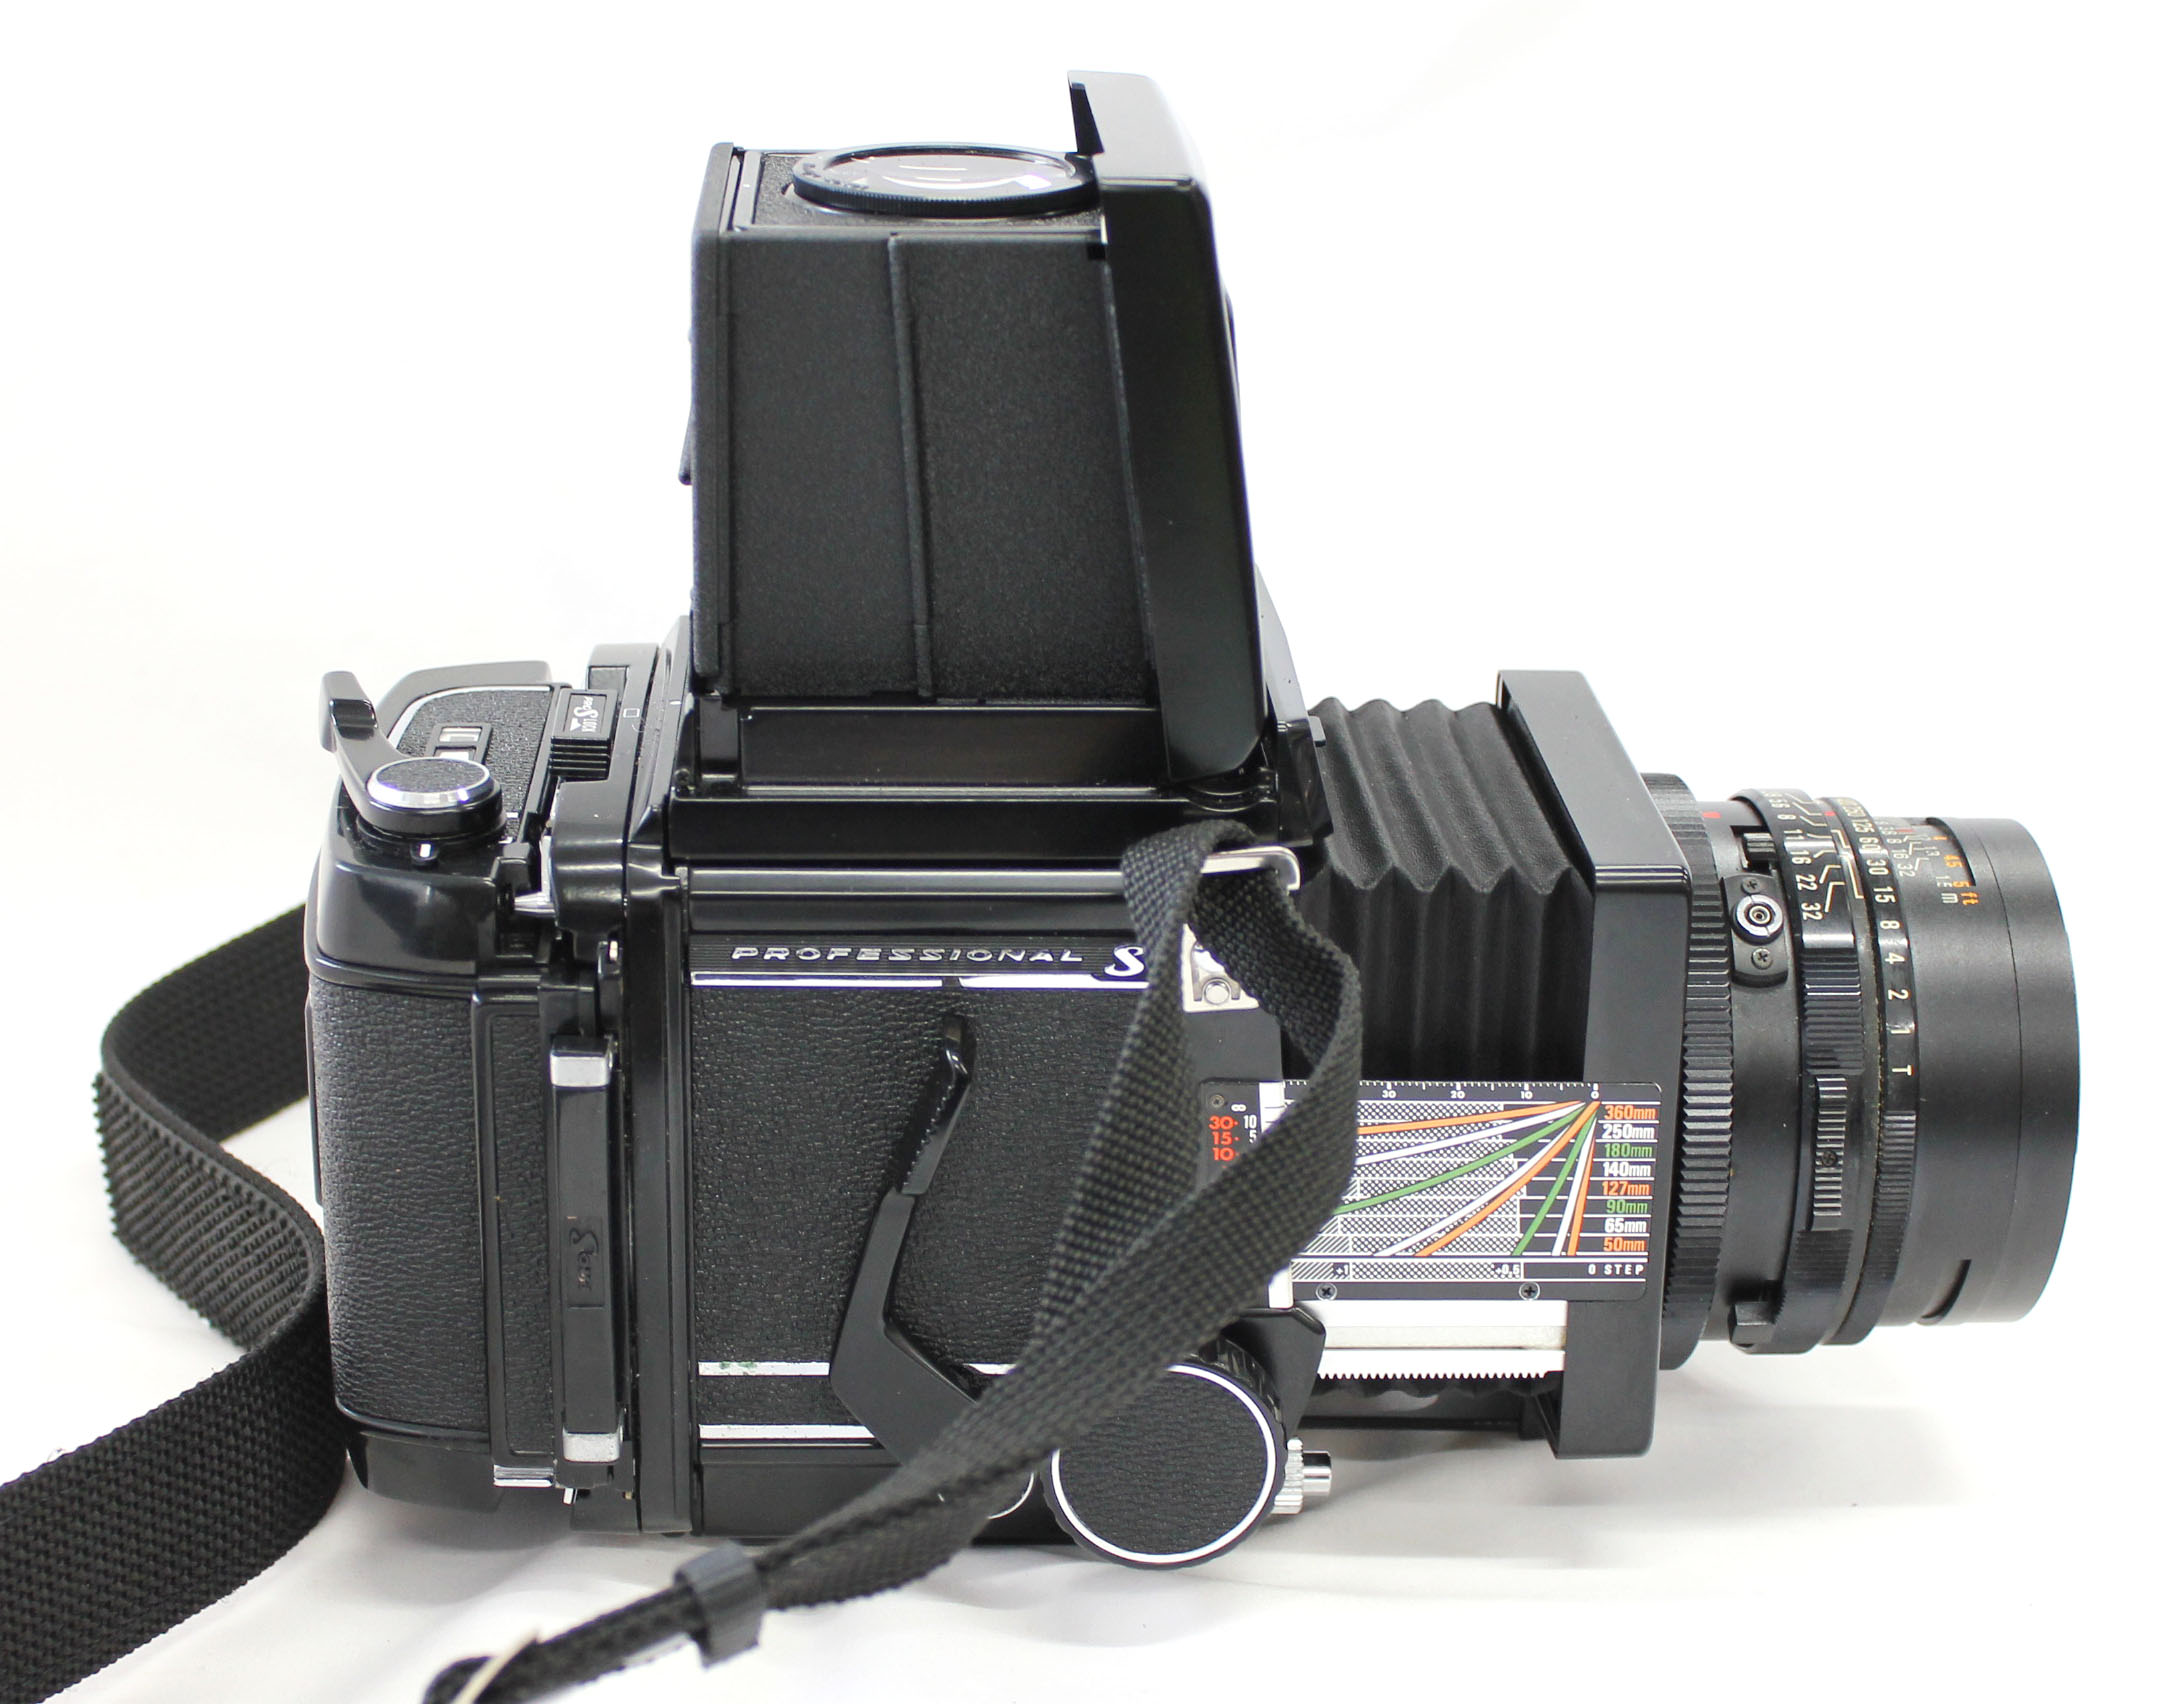 Mamiya RB67 Pro S + Sekor C 127mm F/3.8 with Hood + 120 Film Back 